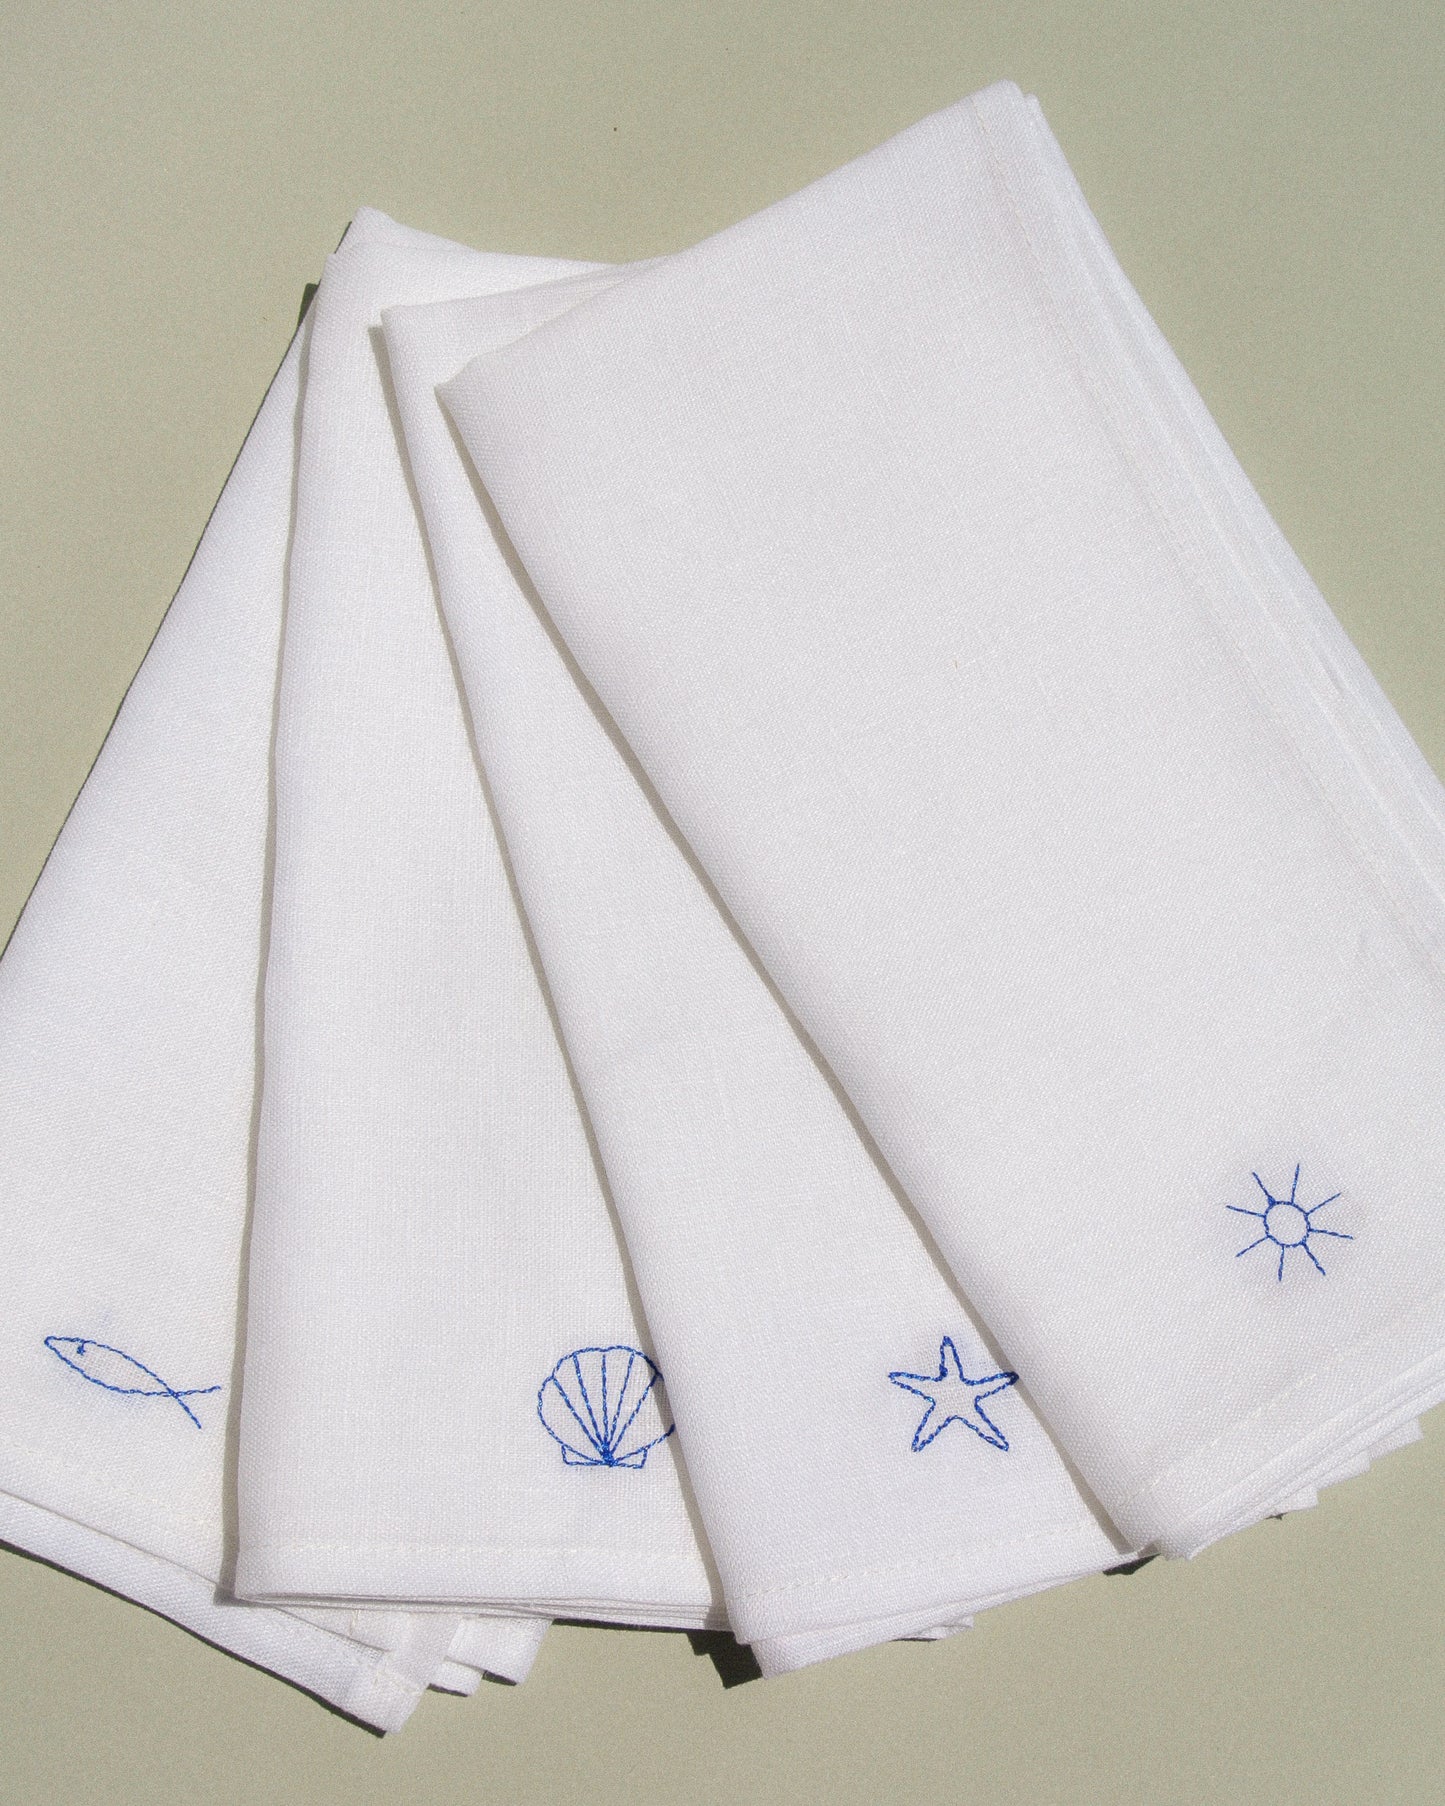 PRE ORDER: Sul Mare - Embroidered Linen Napkins Set of 4